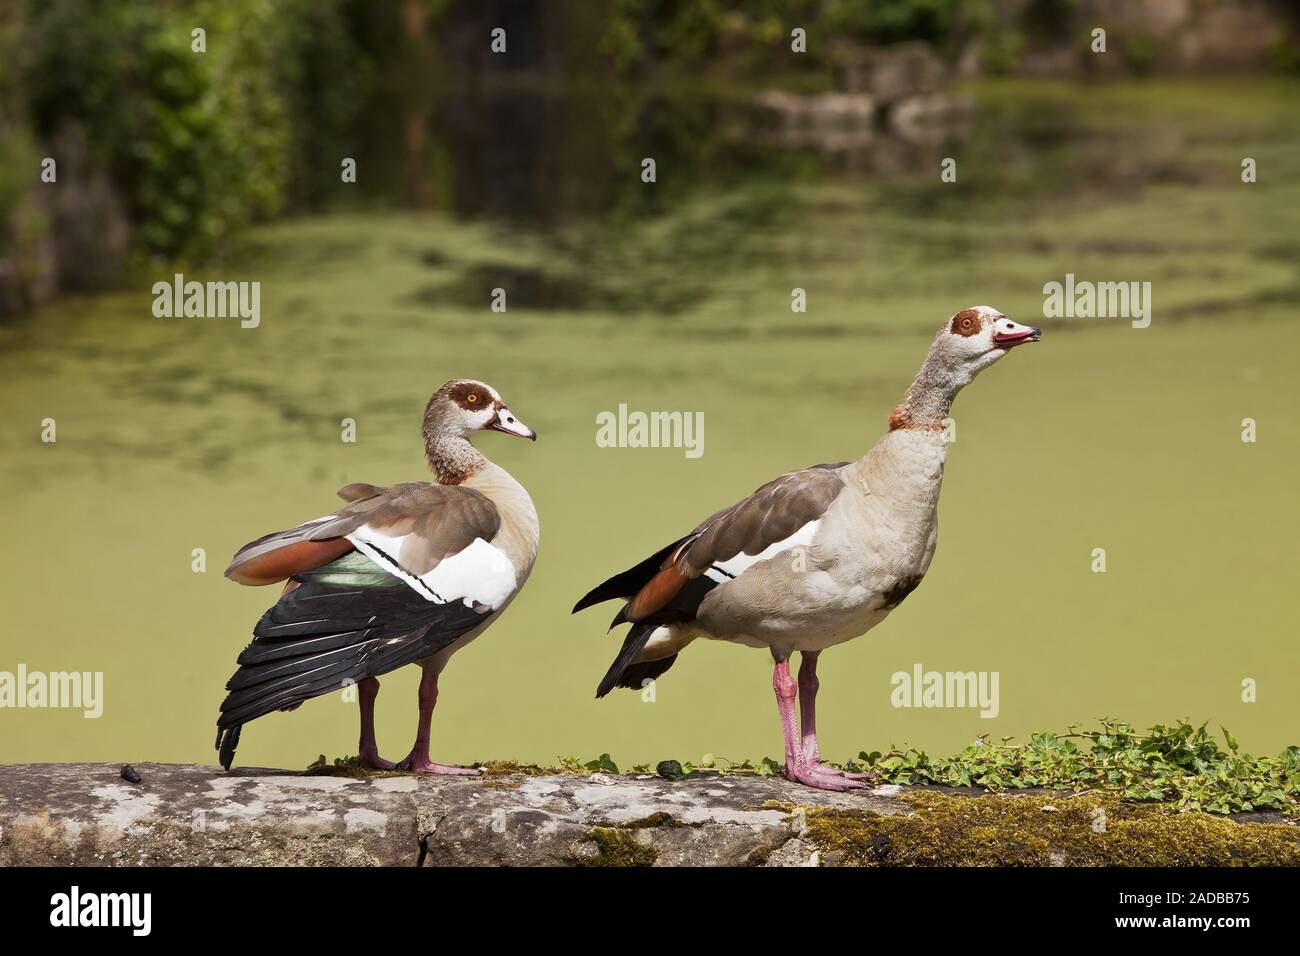 Egyptian goose (Alopochen aegyptiacus), Weilerbach castle, Rhineland-Palatinate, Germany, Europe Stock Photo